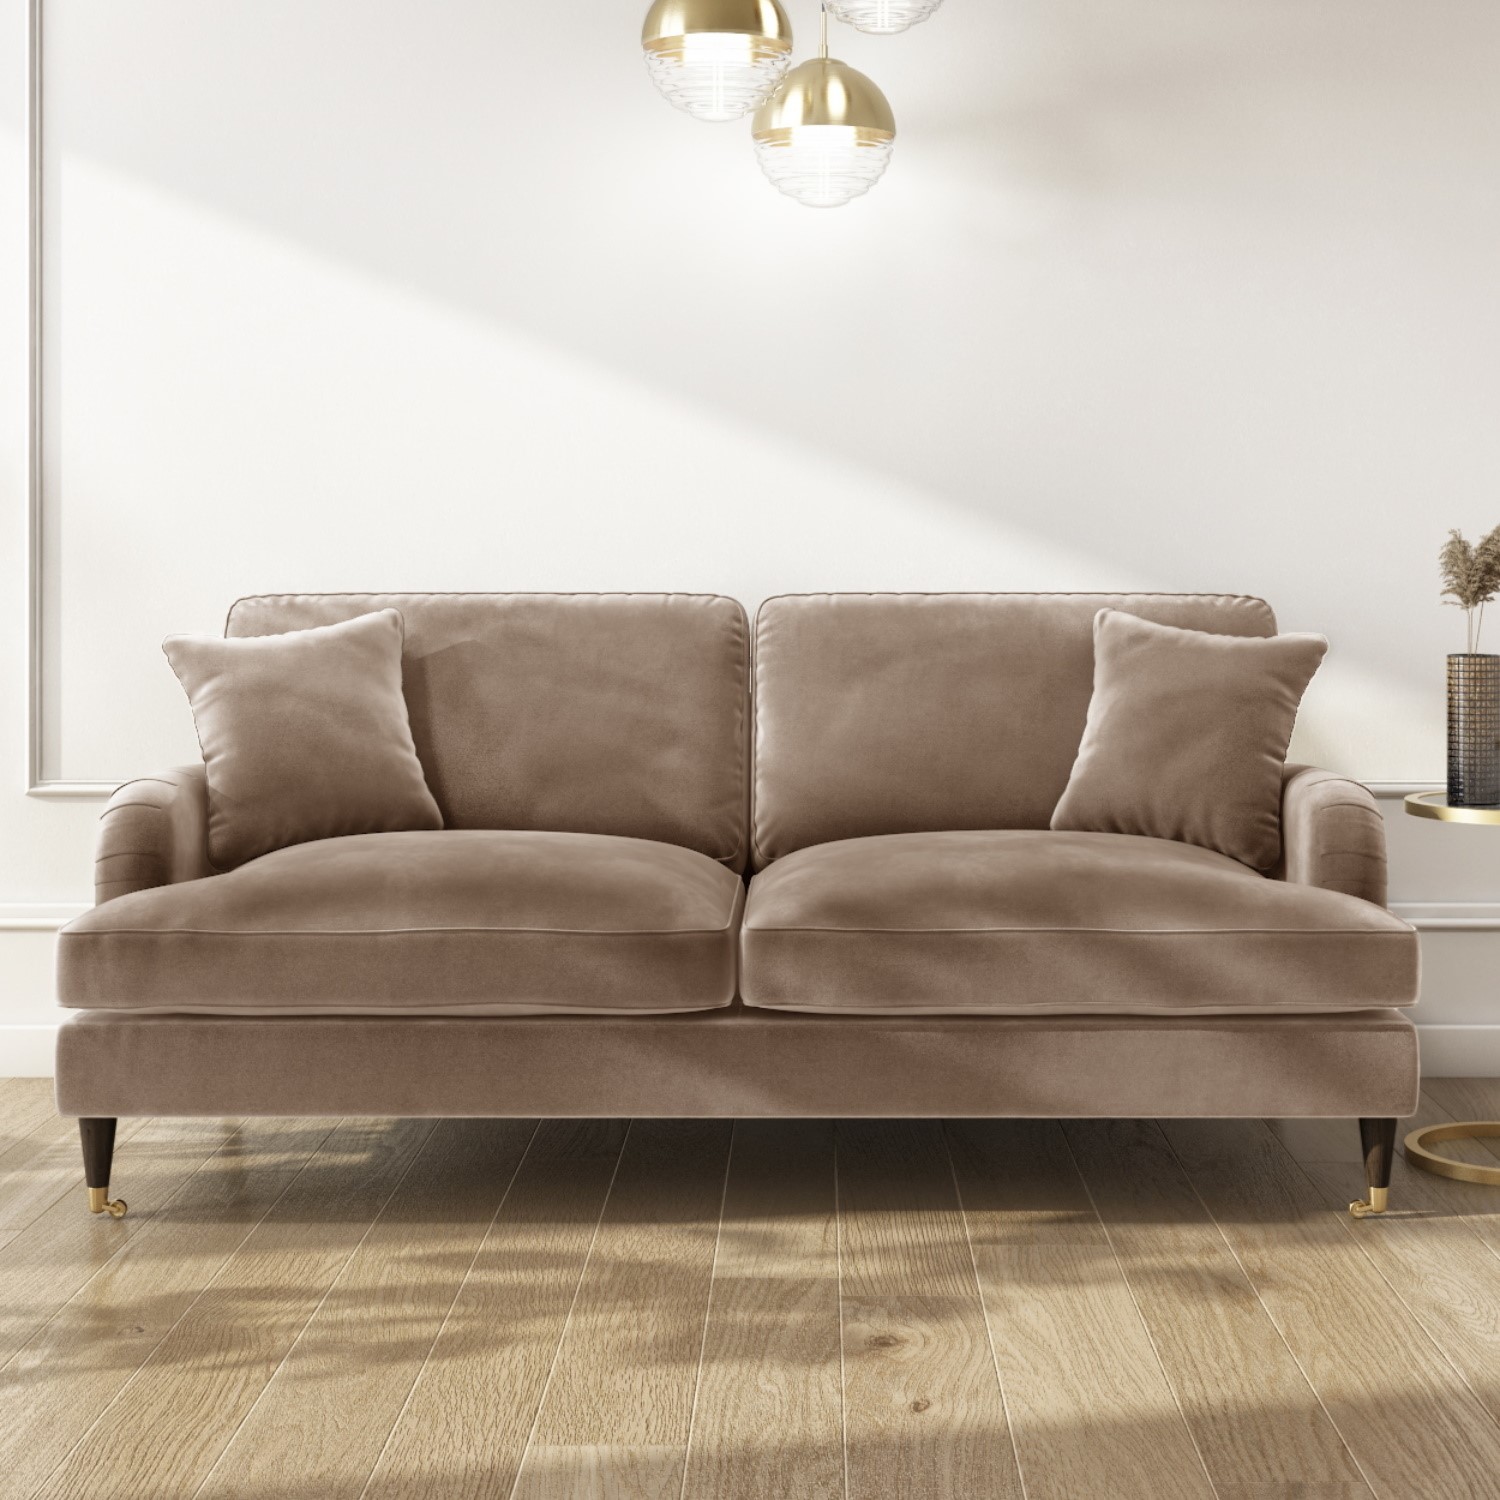 Read more about Beige velvet sofa seats 3 payton